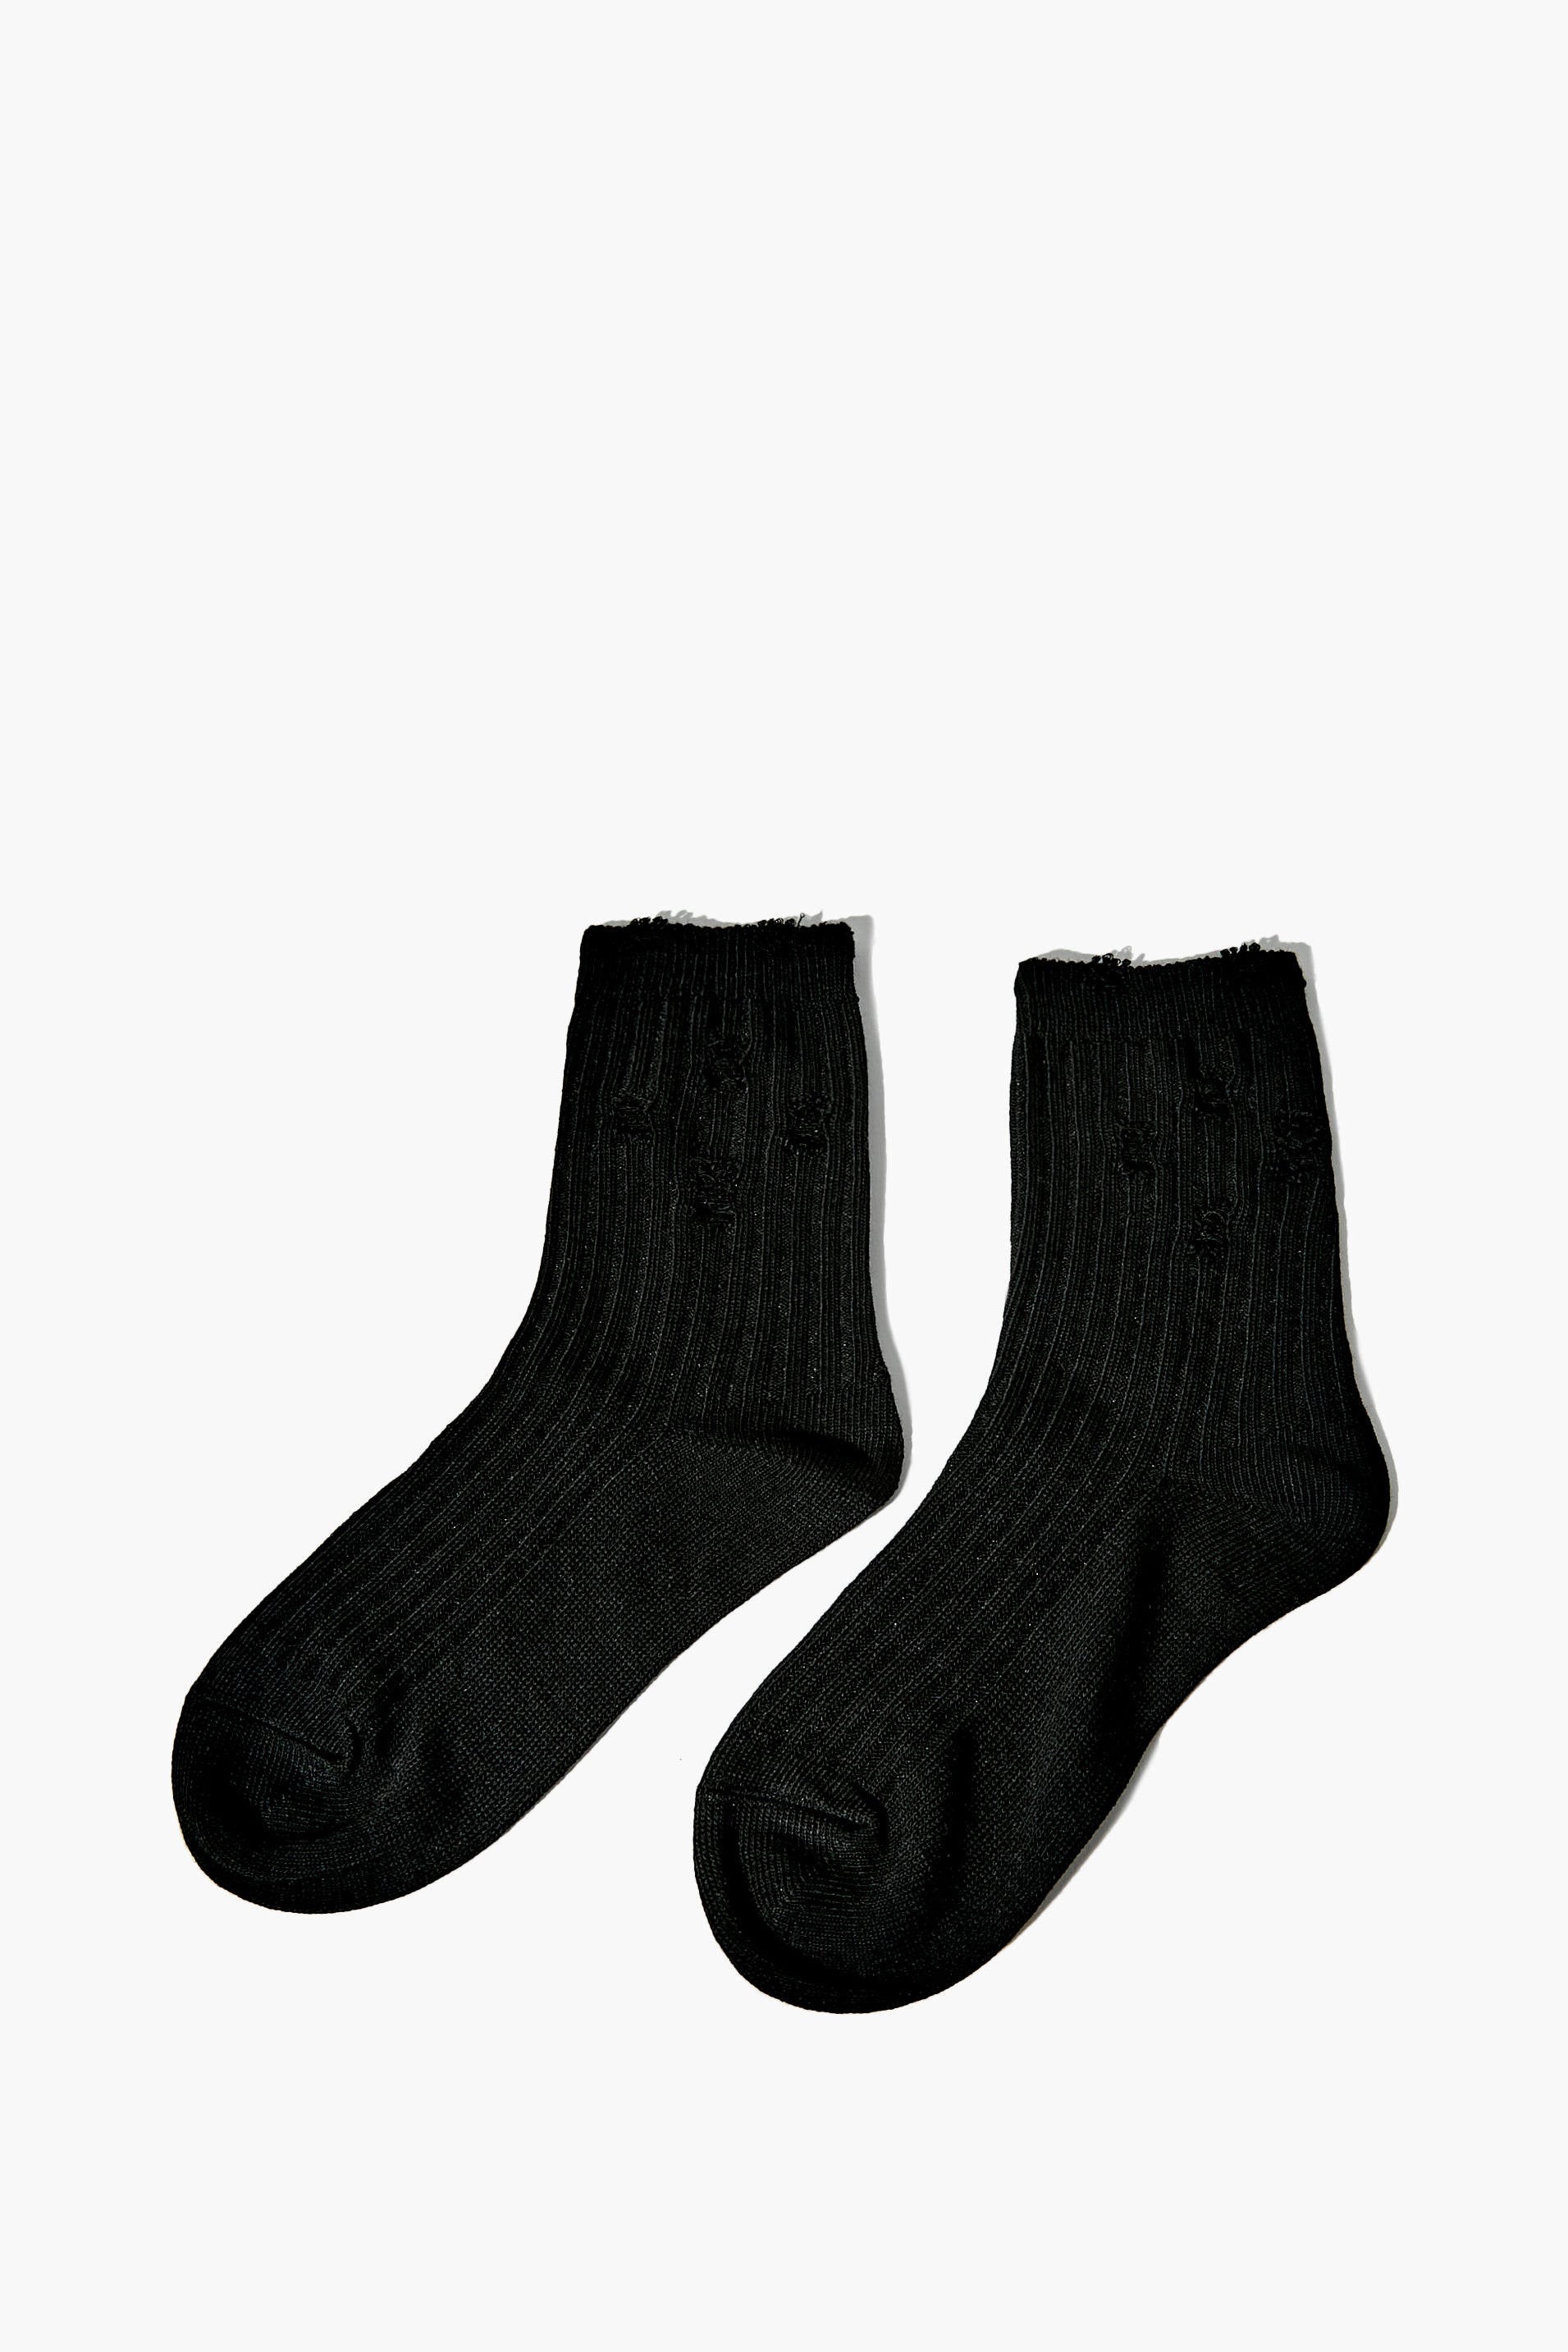 Black Distressed Crew Socks 1